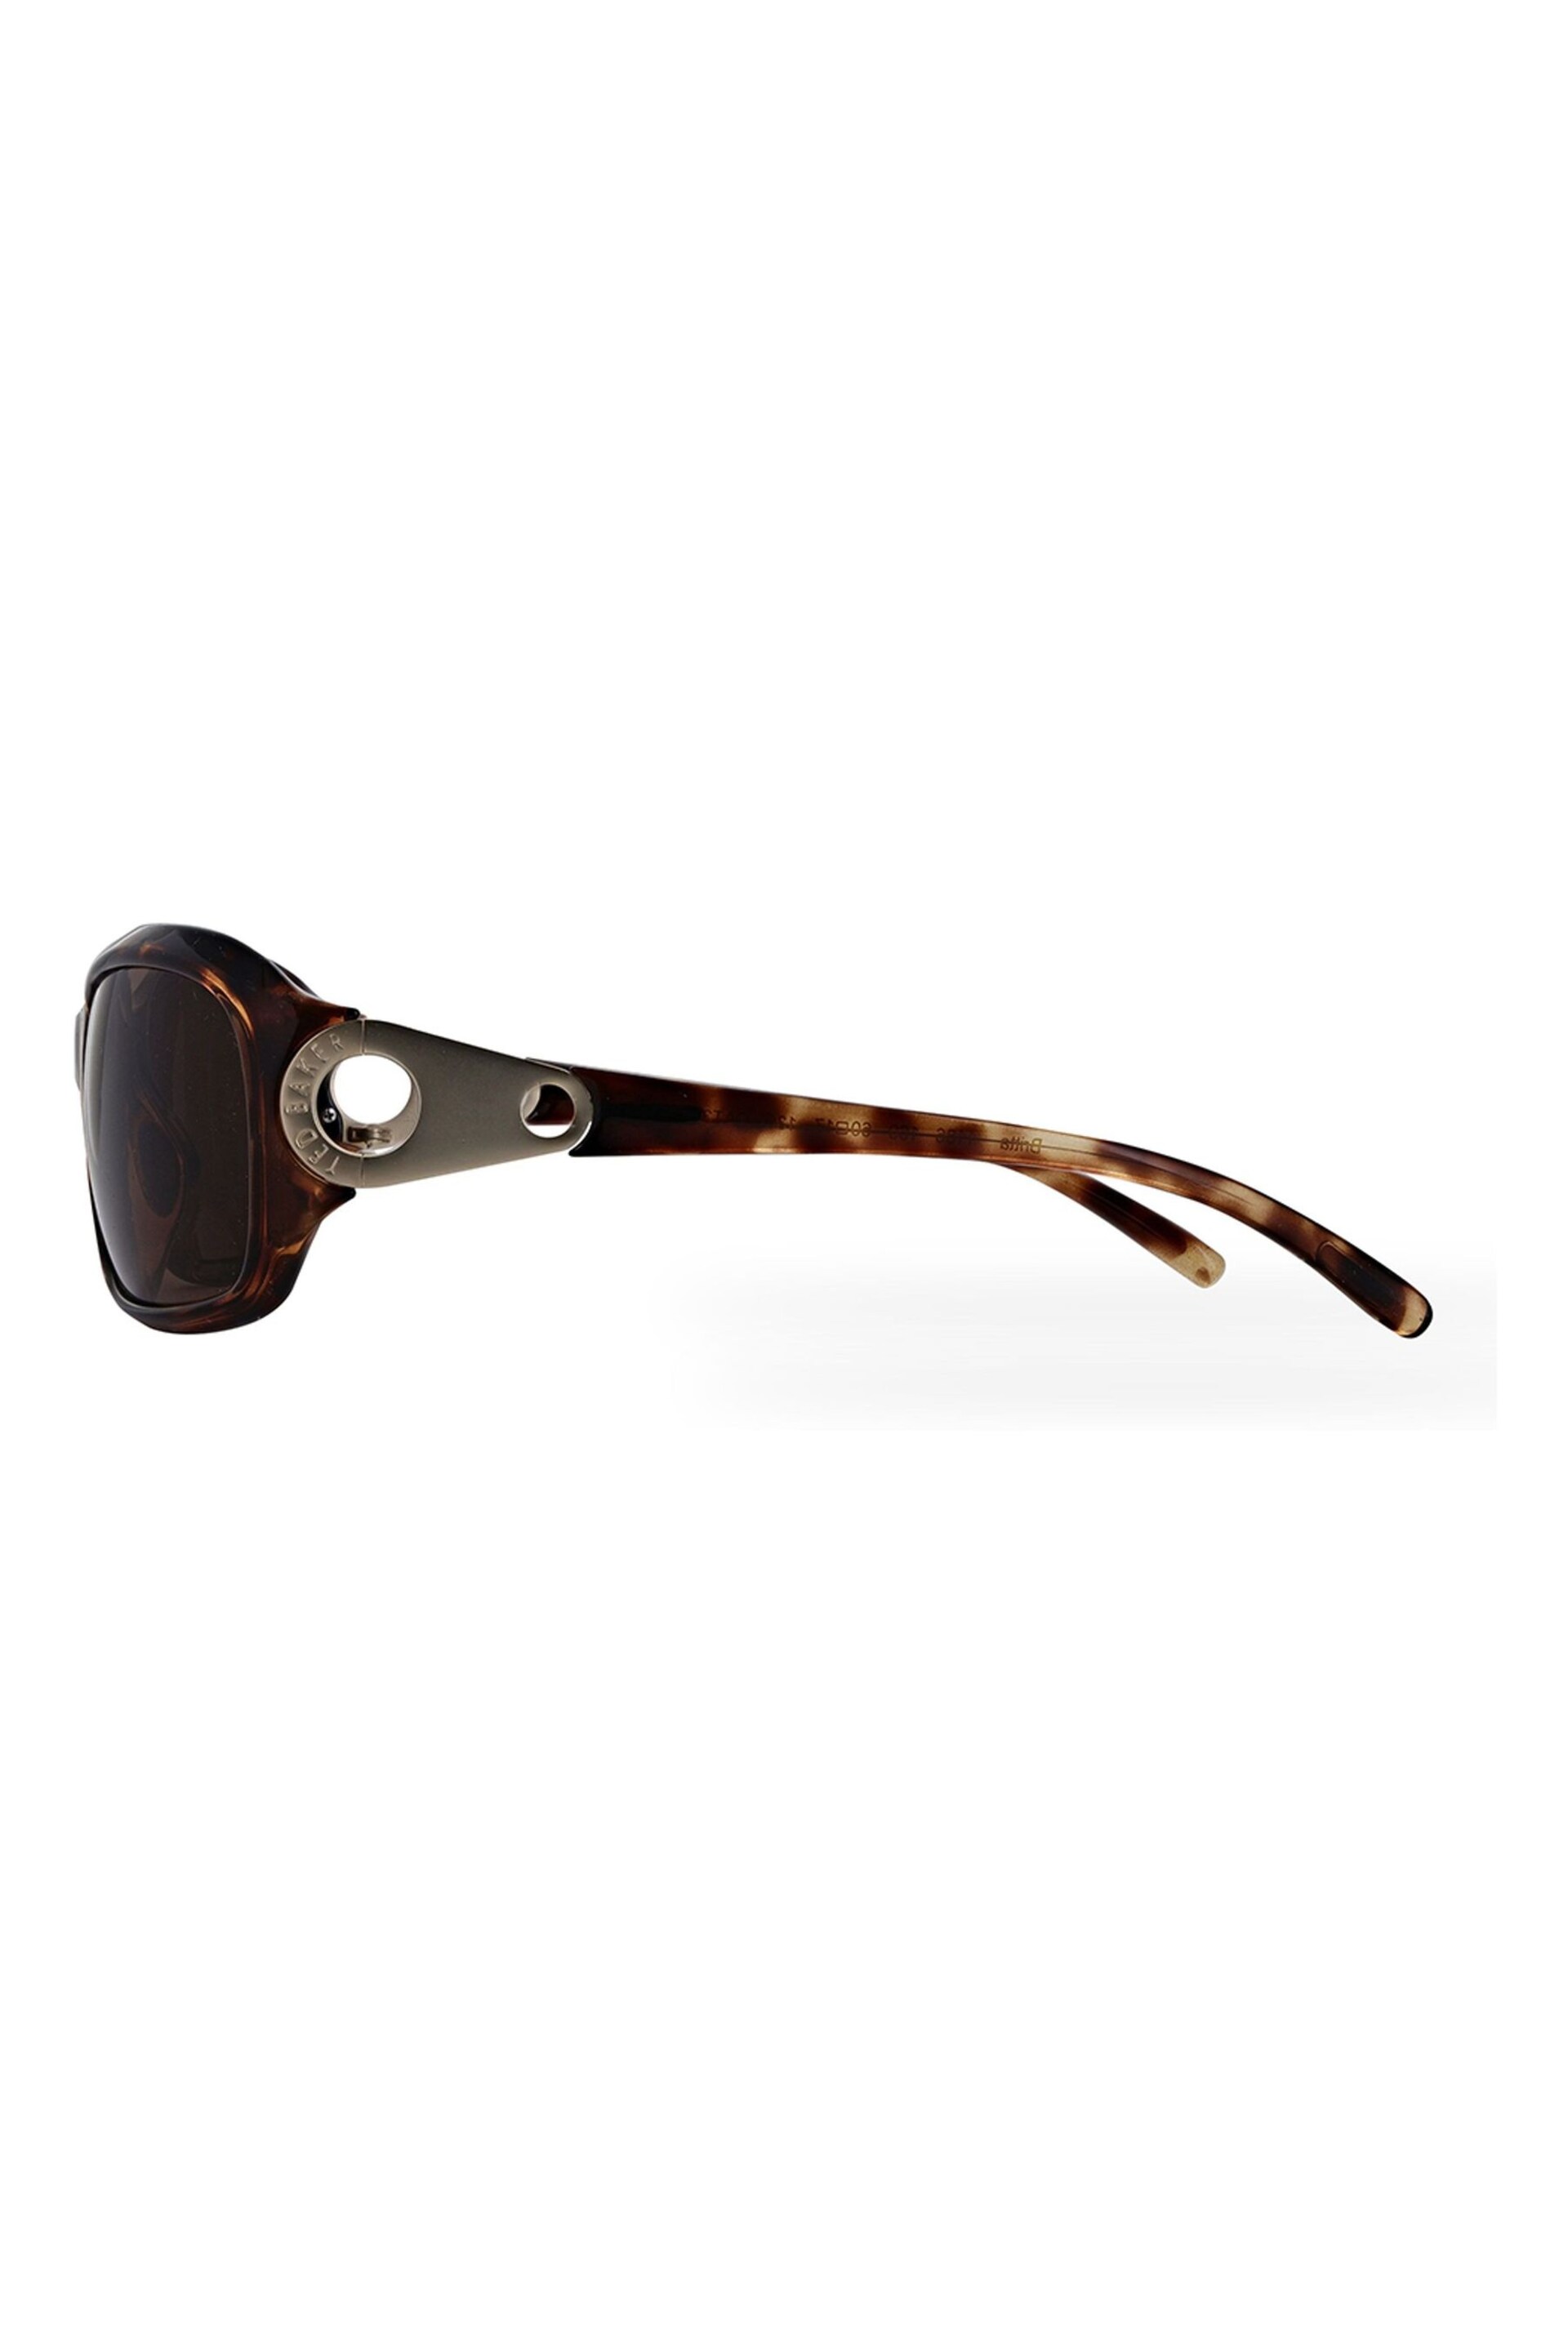 Ted Baker Tortoiseshell Brown Fashion Sunglasses - Image 3 of 5